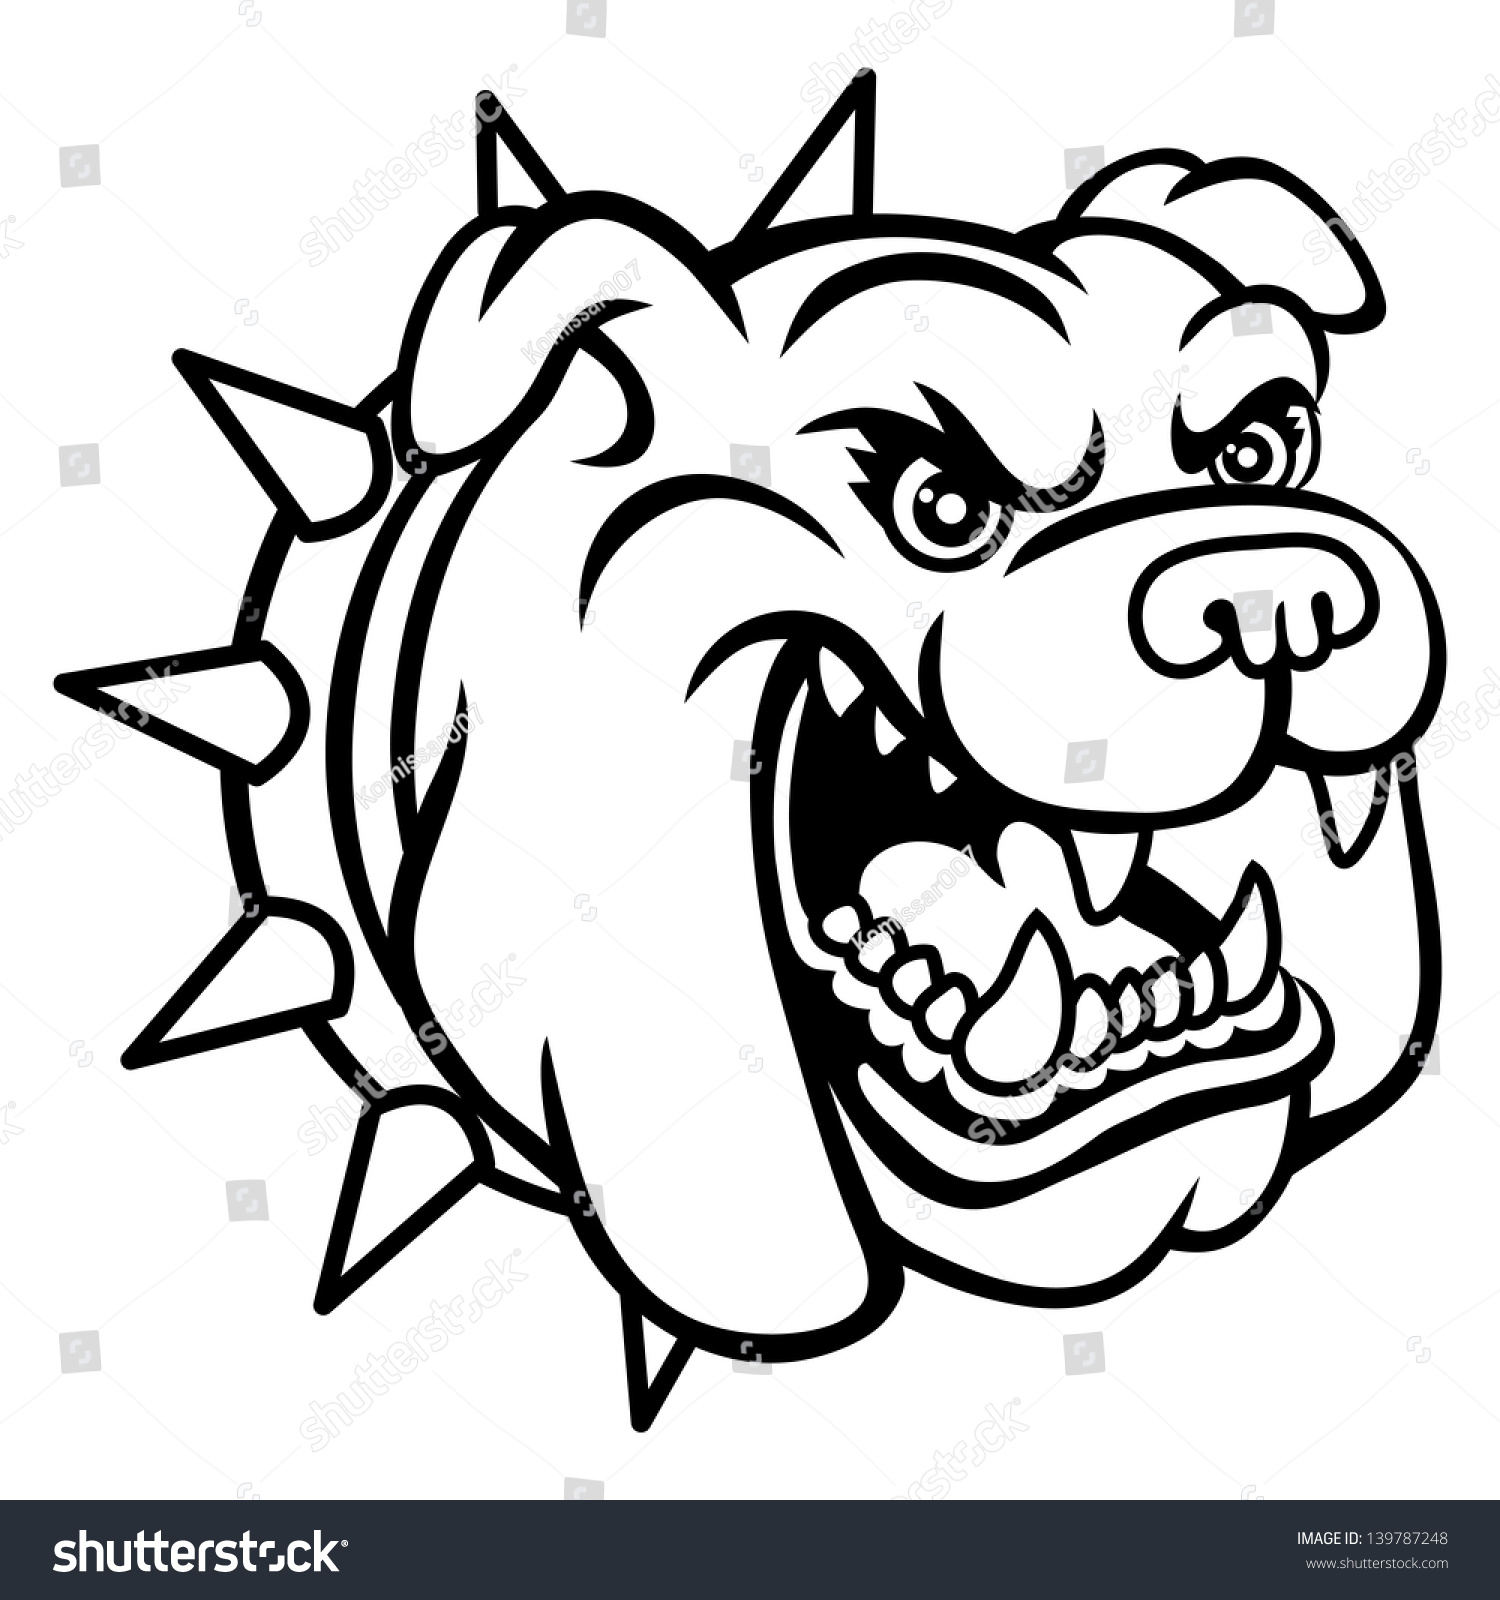 39+ Gambar anjing logo release